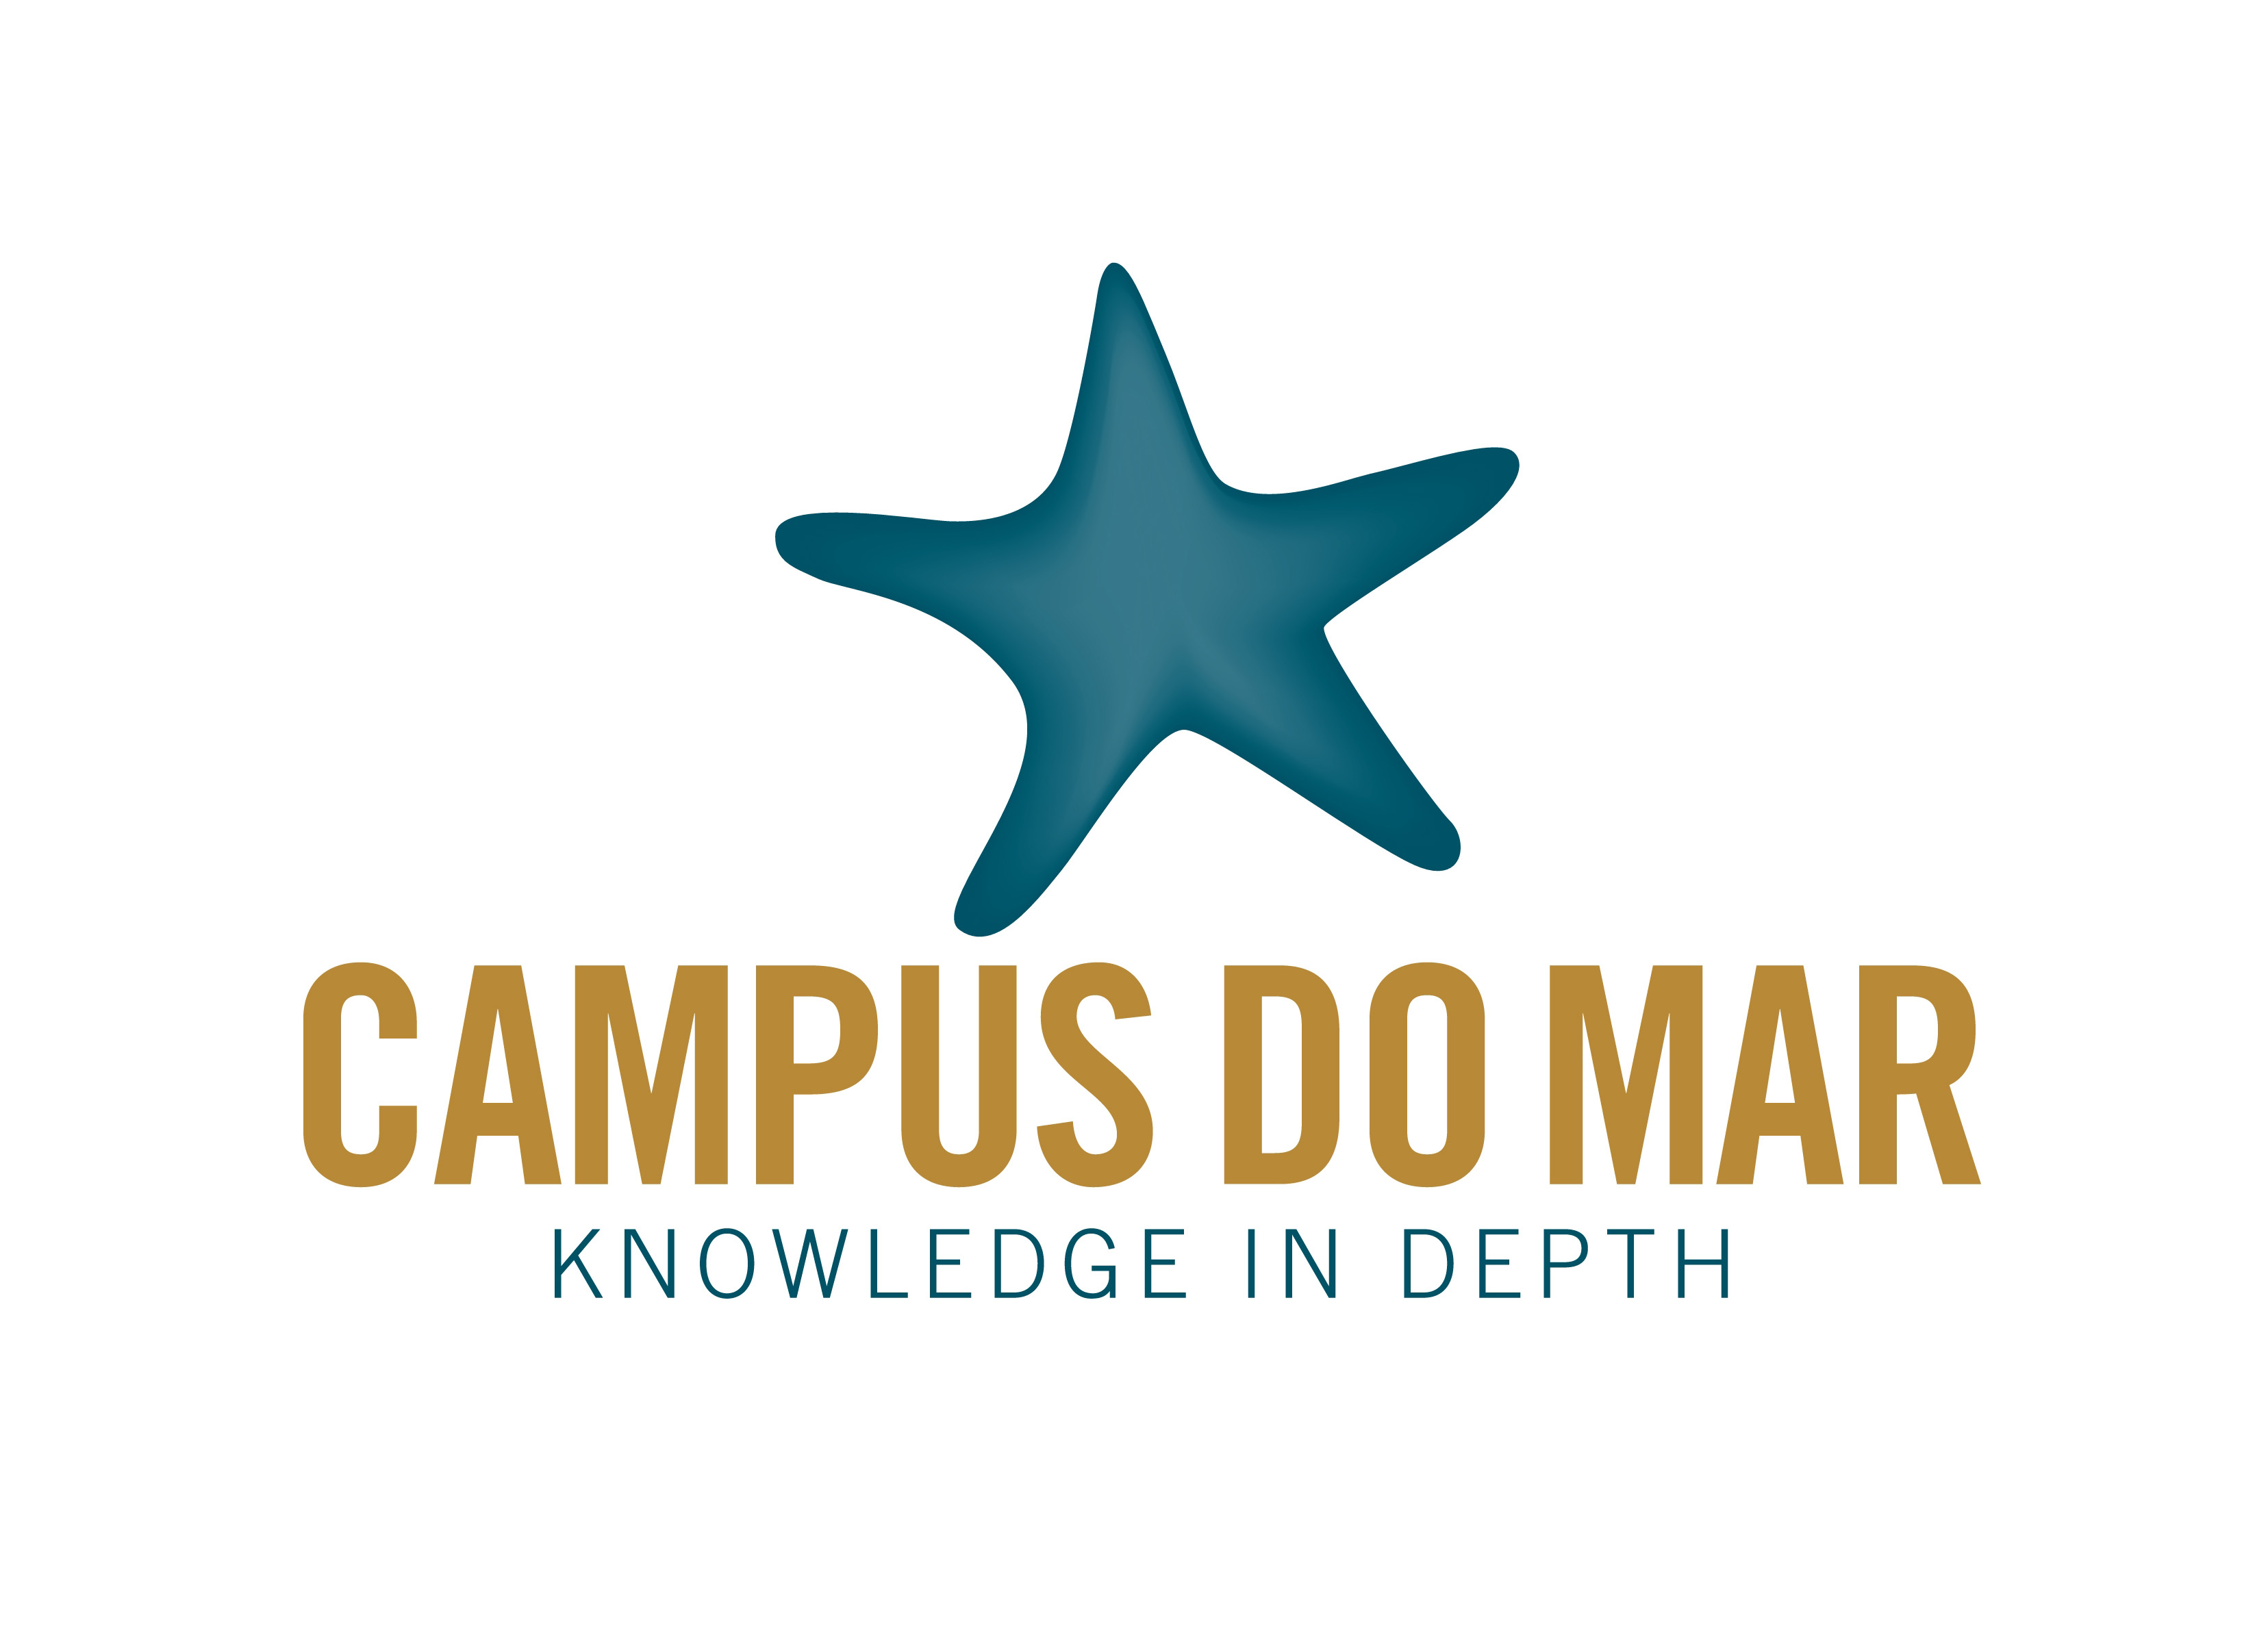 Campus do Mar